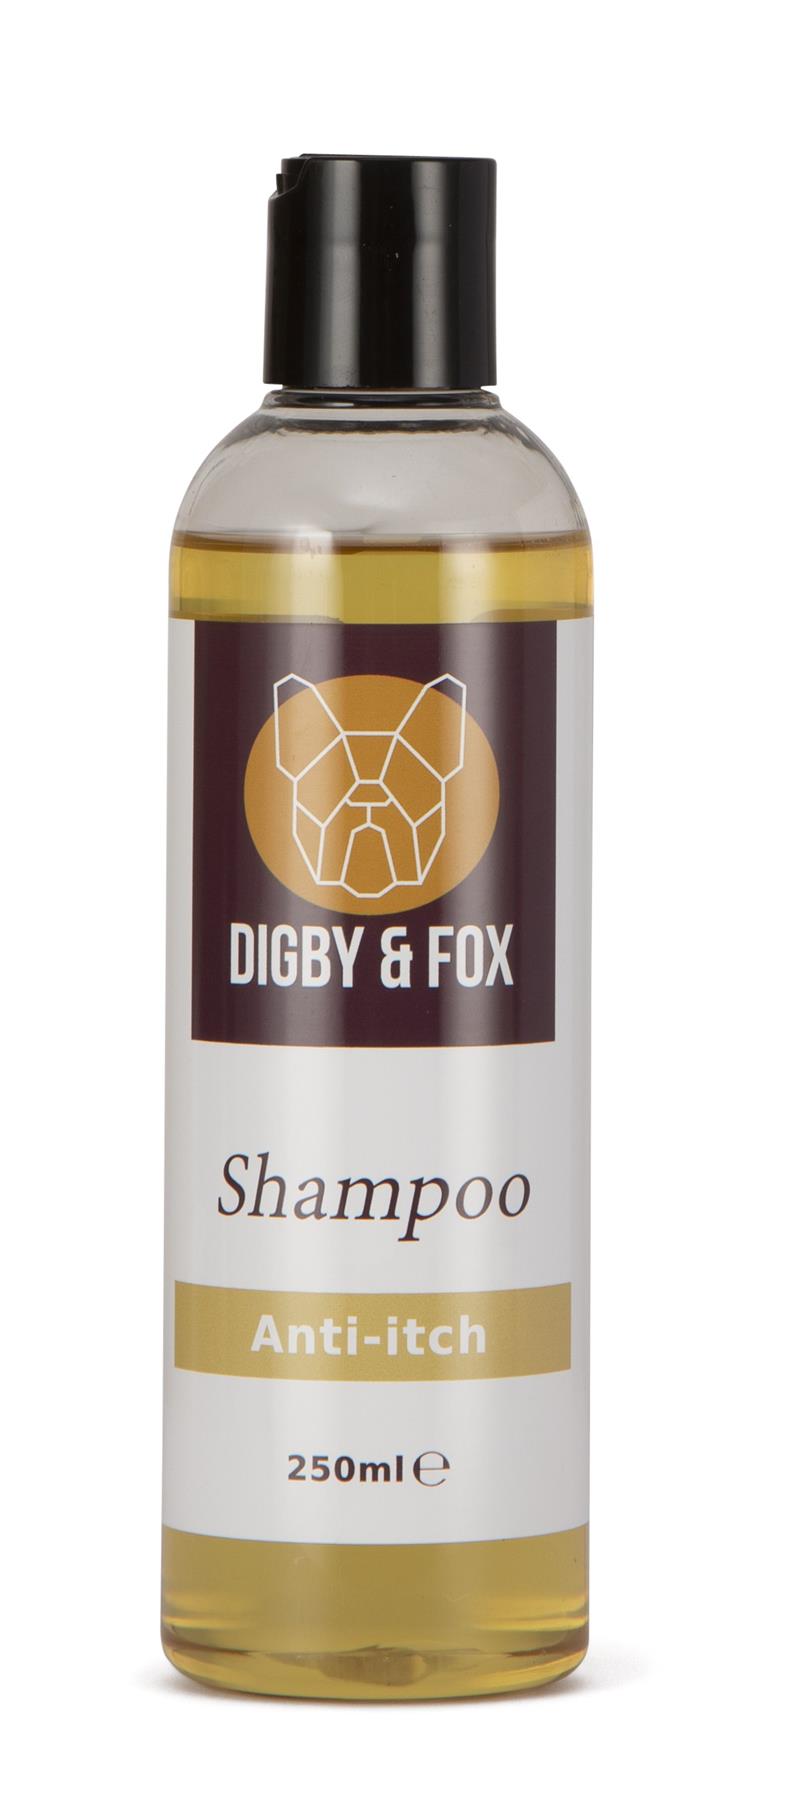 Digby & Fox Anti-itch Shampoo - Just Horse Riders